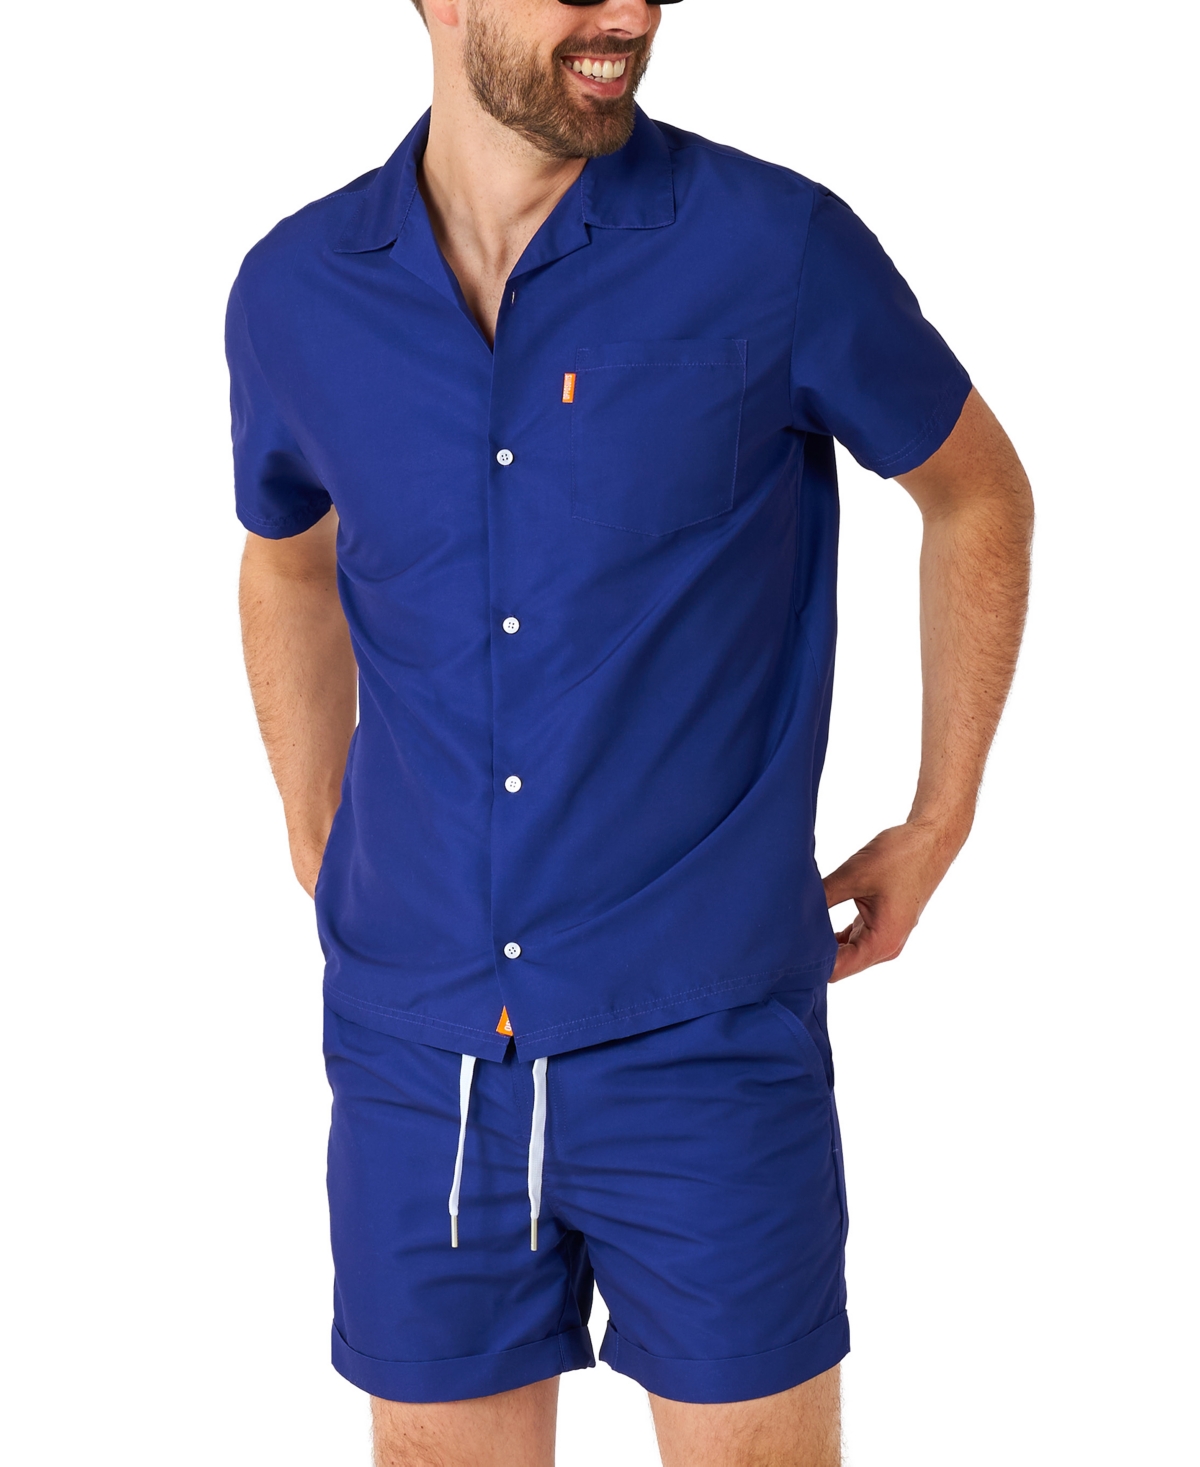 Men's Short-Sleeve Royal Navy Shirt & Shorts Set - Blue